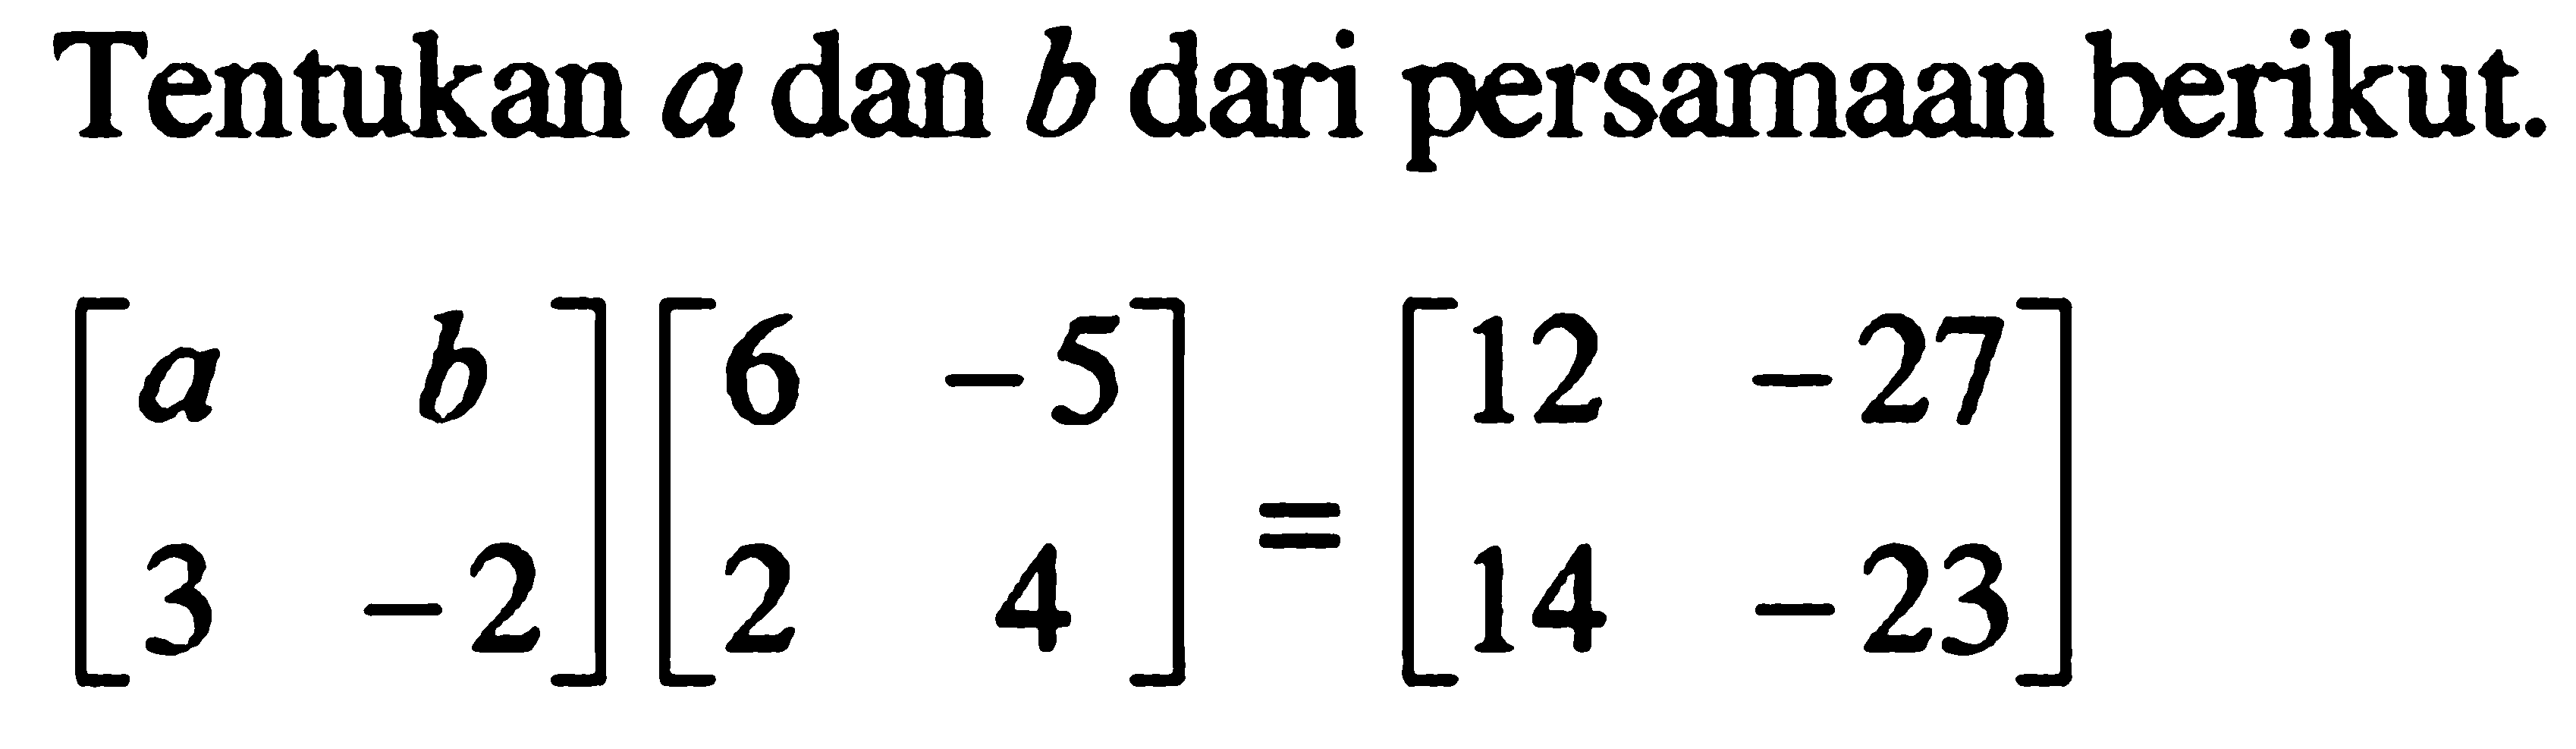 Tentukan a dan b dari persamaan berikut. [a b 3 -2][6 -5 2 4]=[12 -27 14 -23]